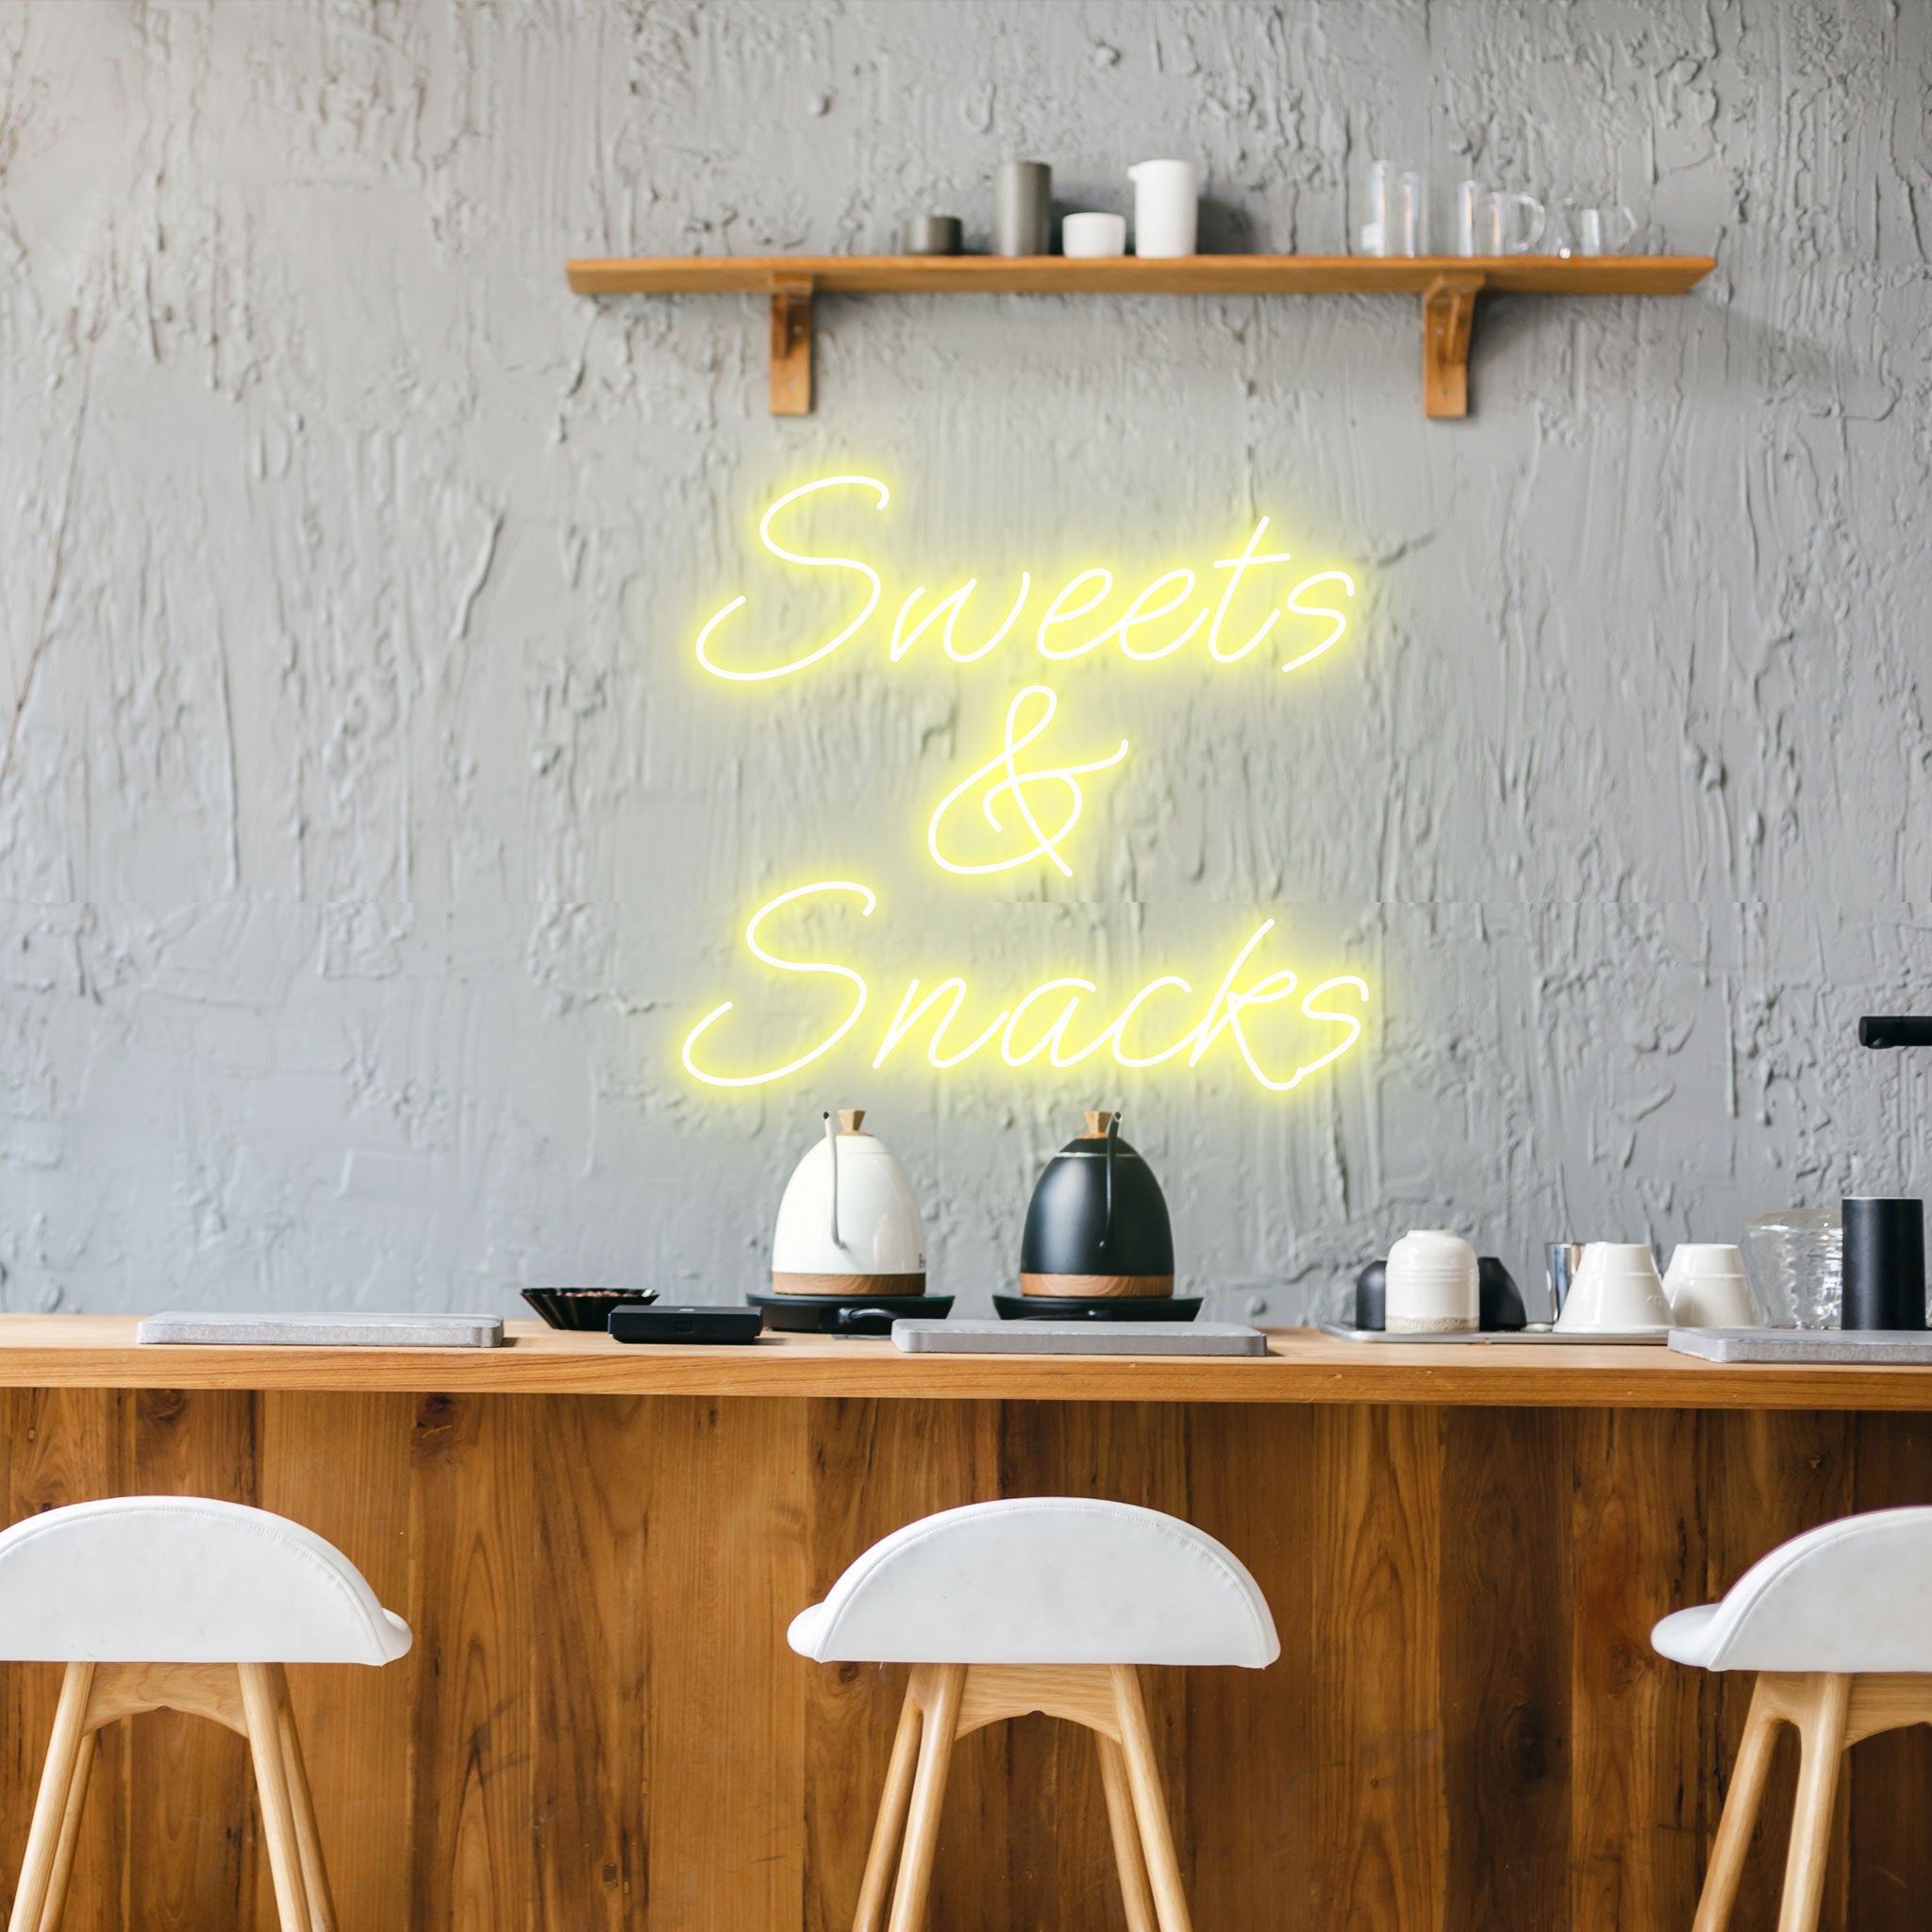 Sweets & Snacks - Neon Sign - Ice Cream Bar / Dessert Bar